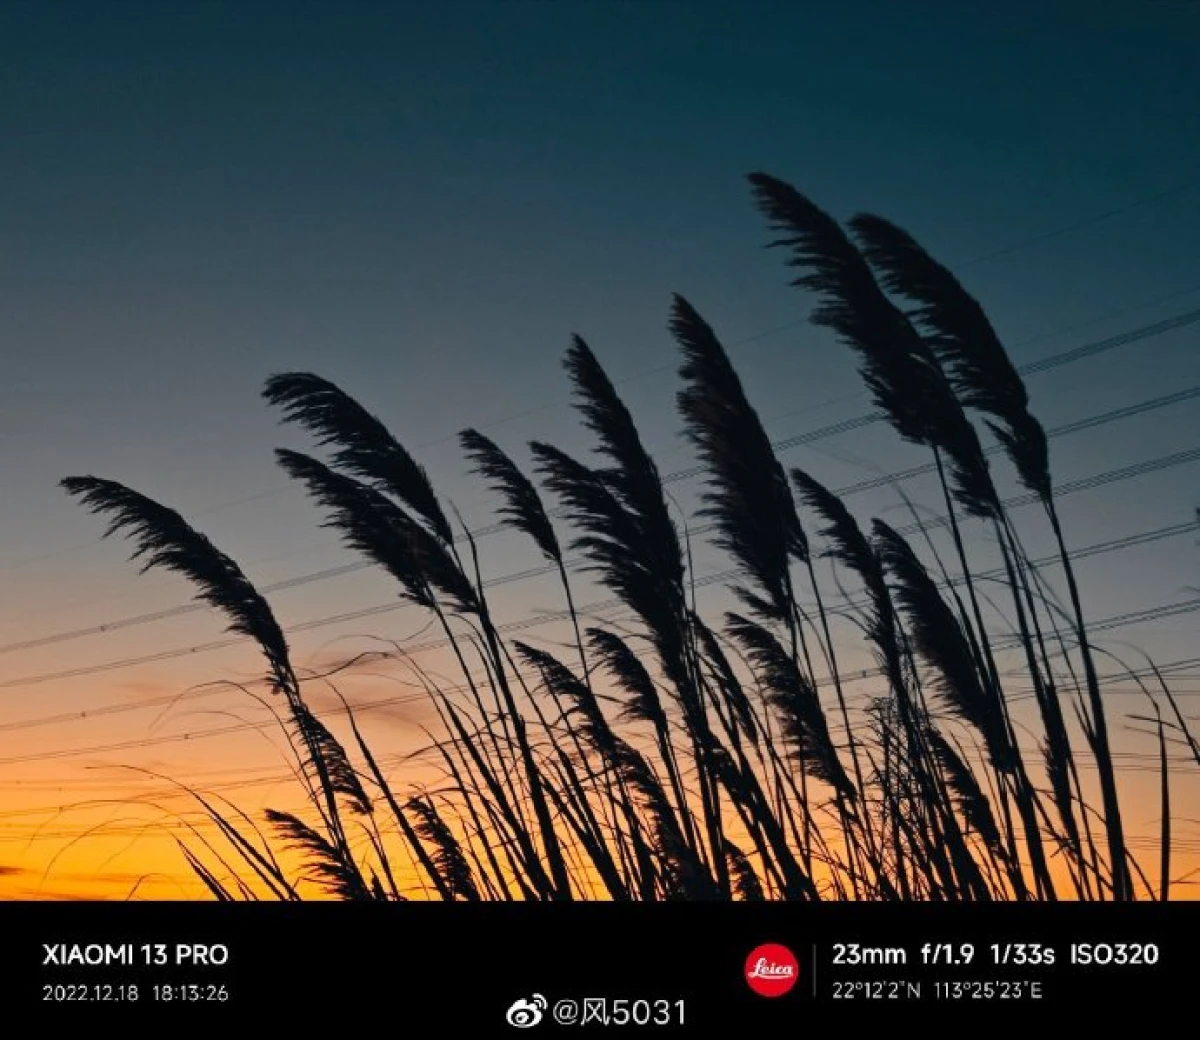 Xiaomi 12 pro примеры фото